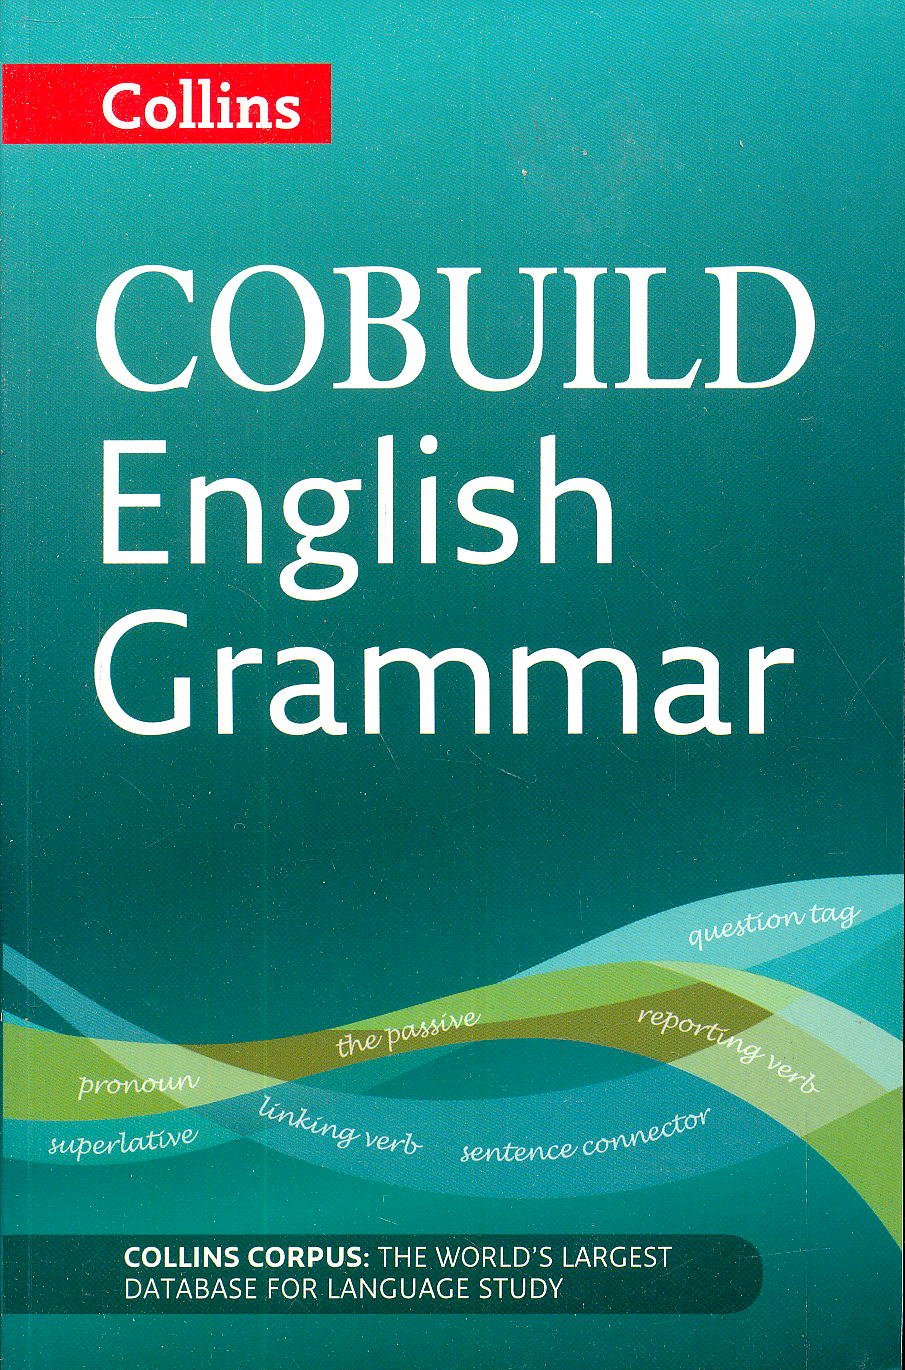 Collins Cobuild English Grammar柯林斯COBUILD英语语法词典 英文原版 word格式下载